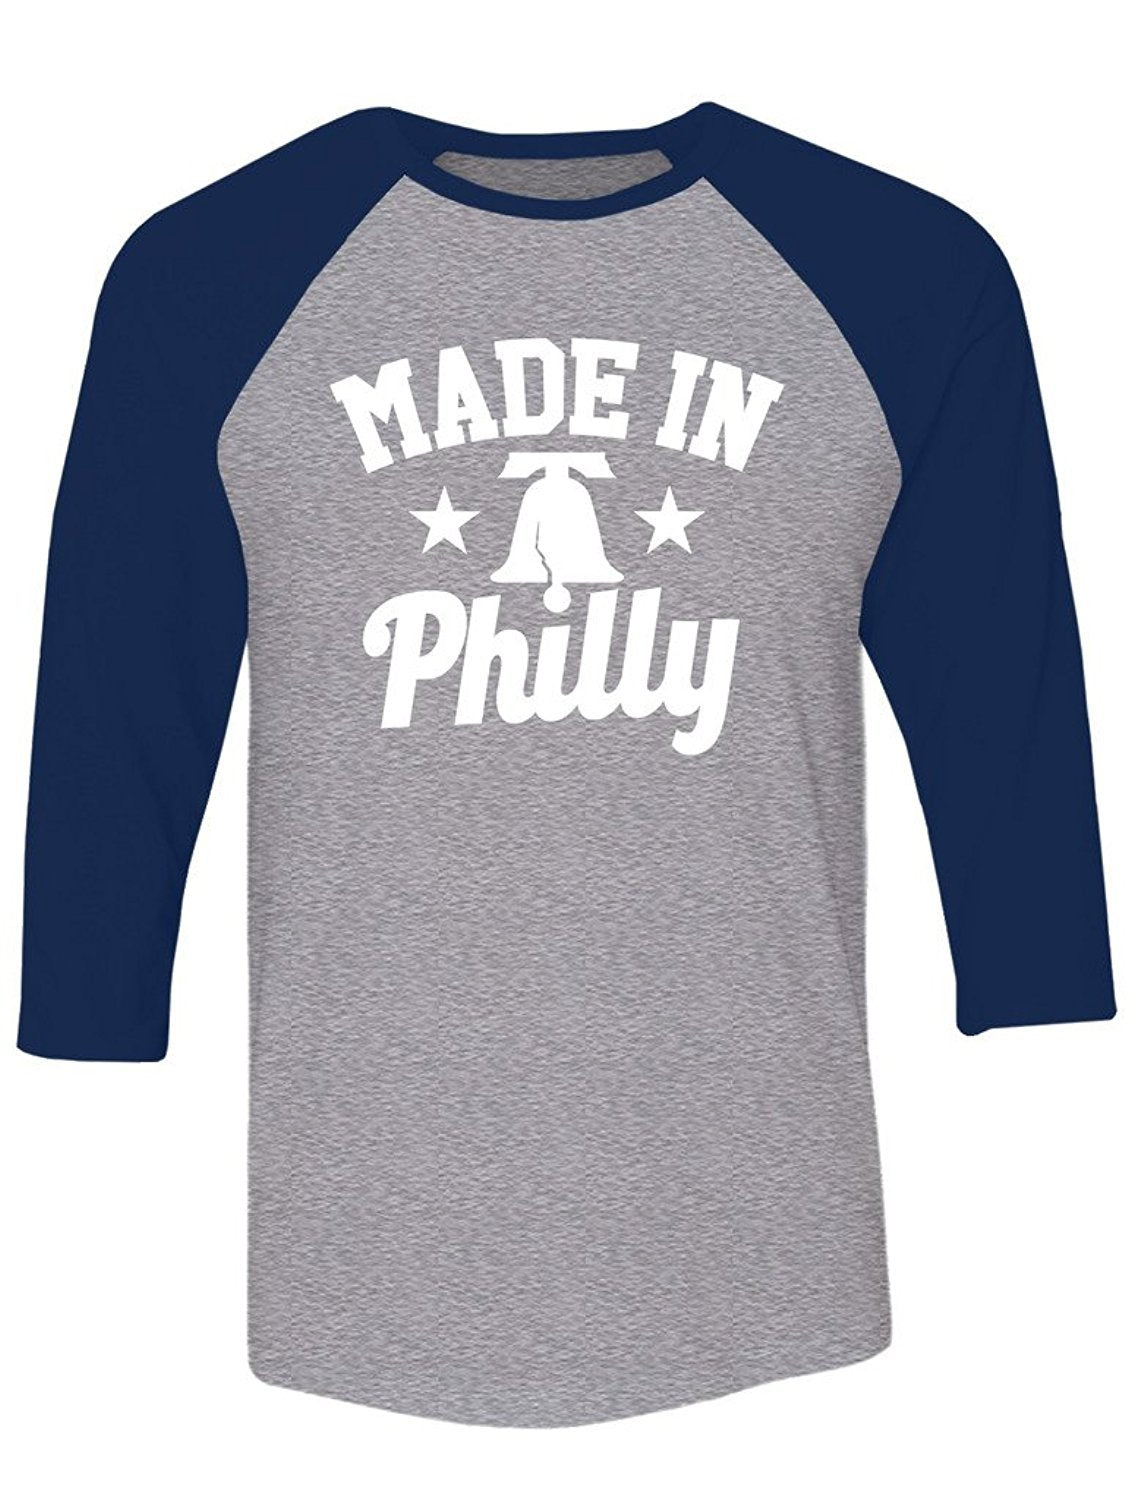 Manateez Unisex Raglan USA Made In Philly Liberty Bell Tee Shirt